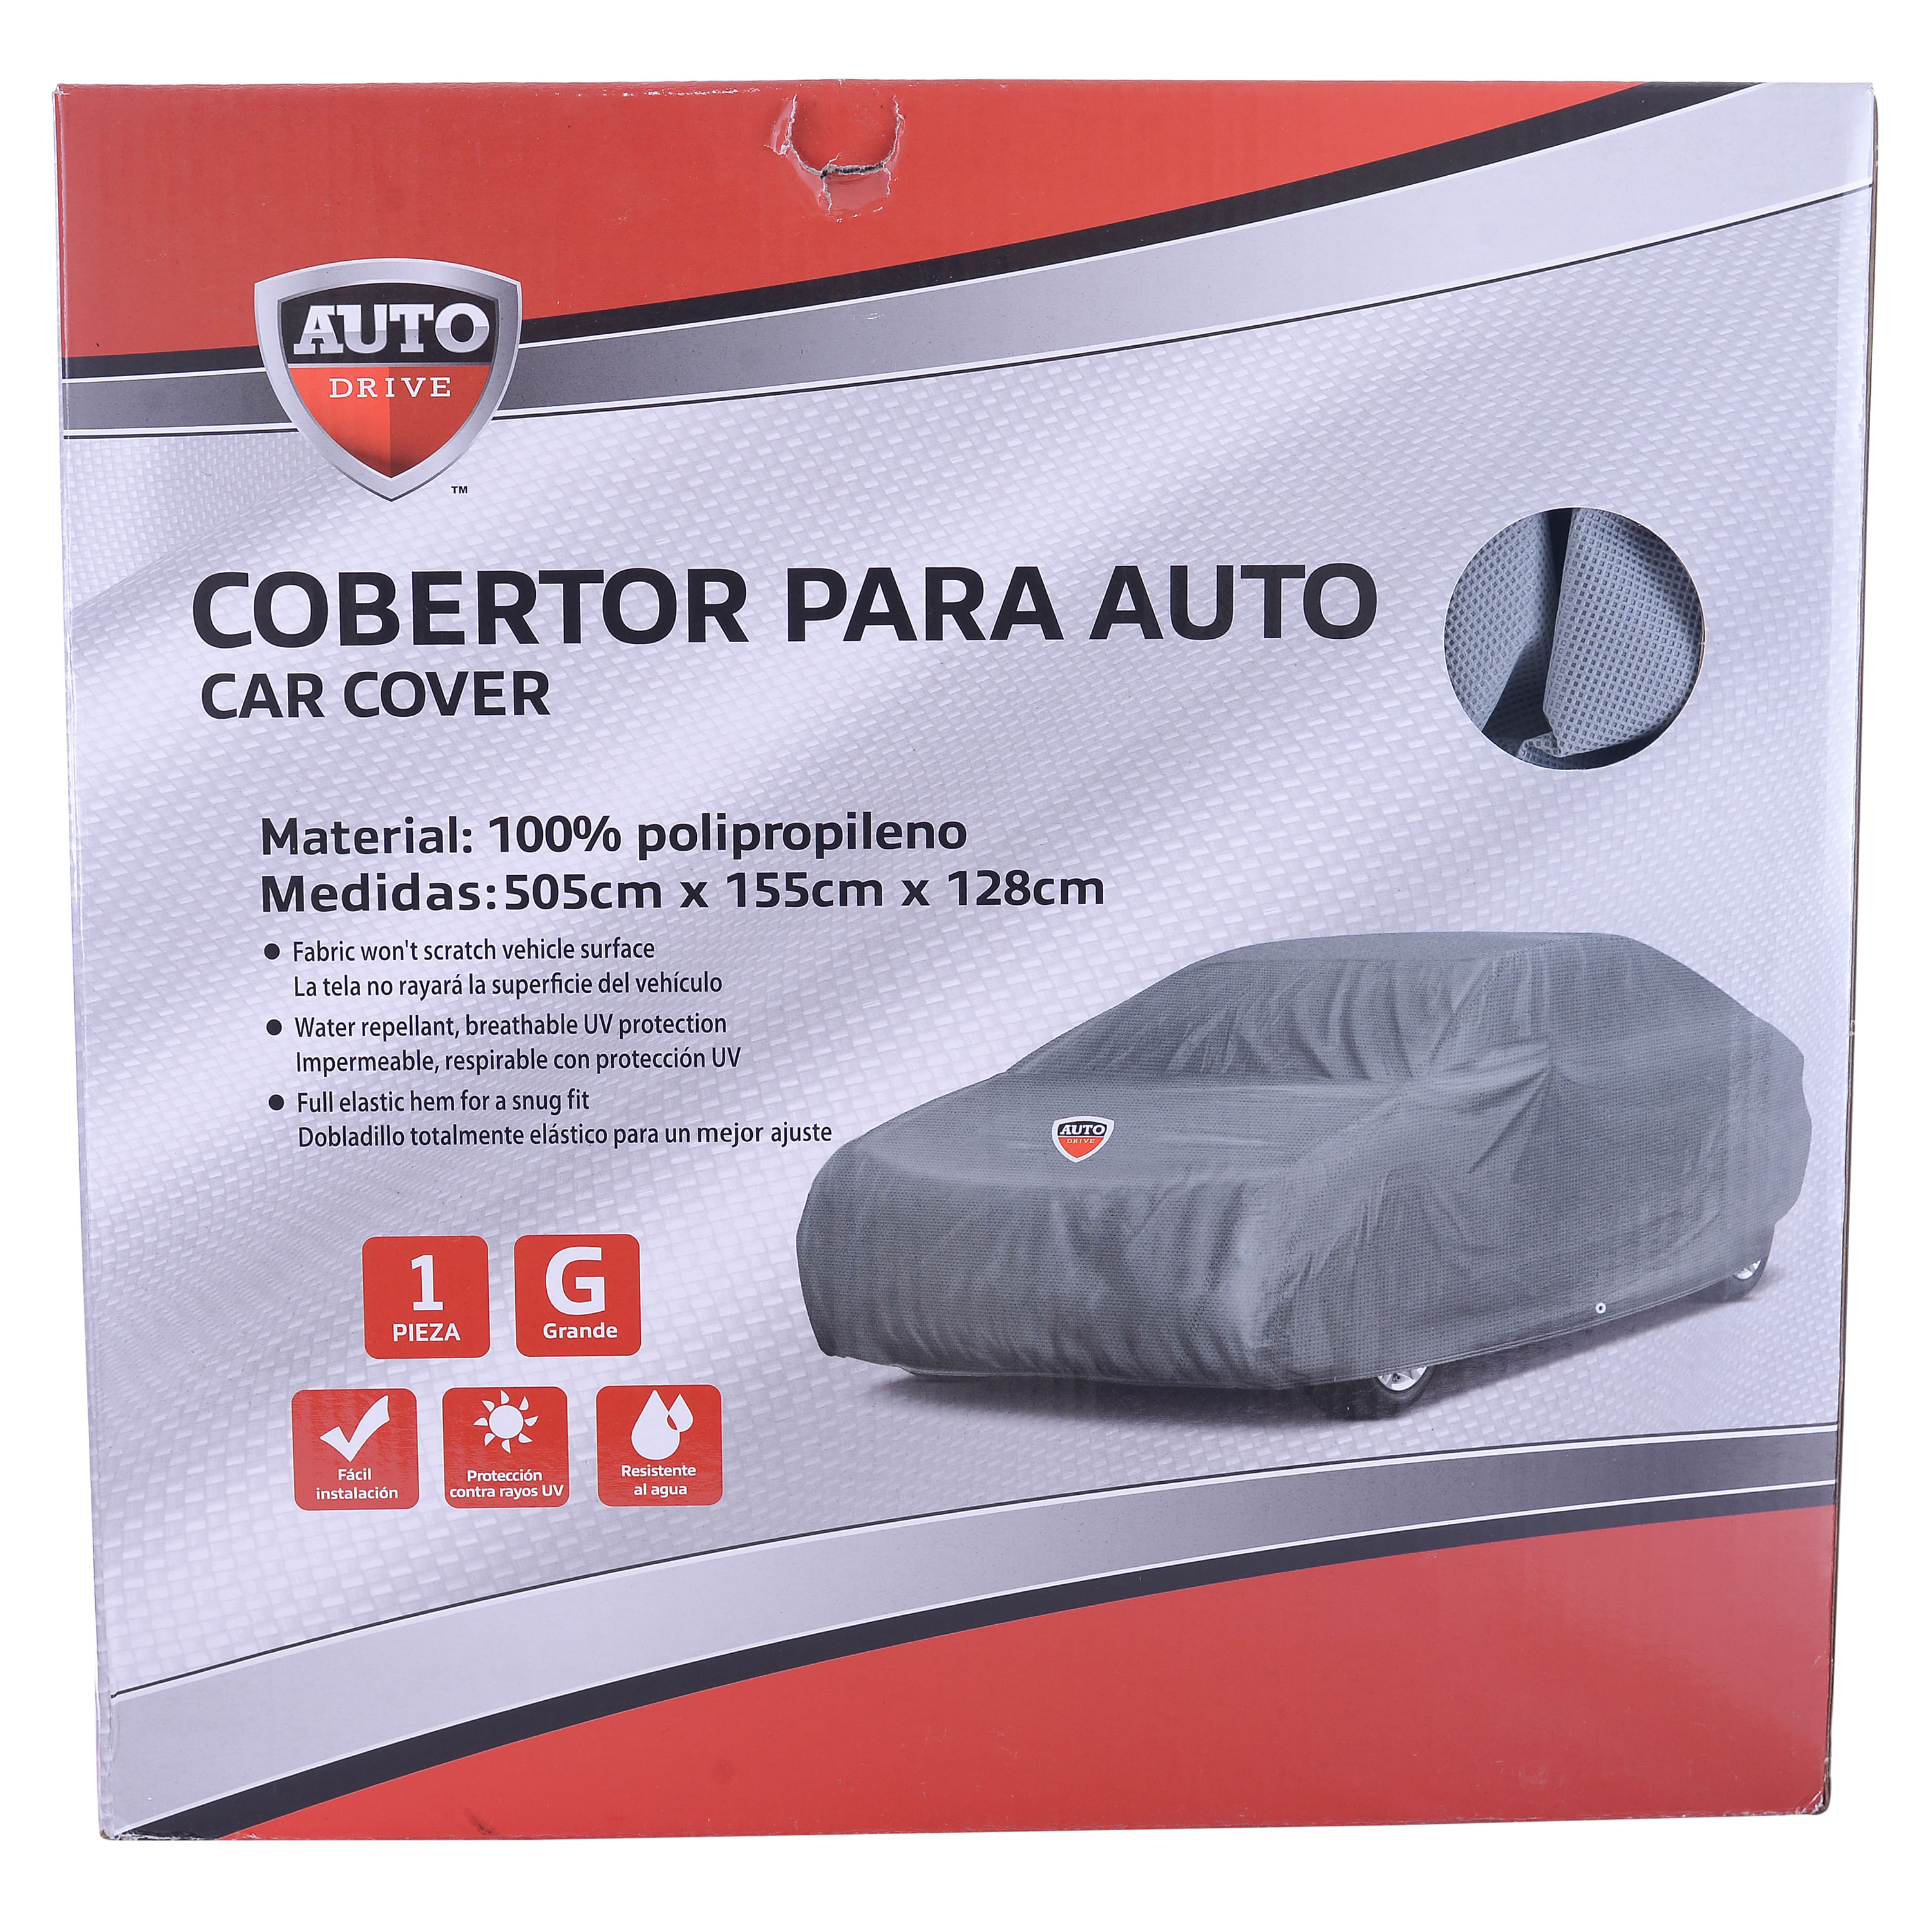 orar asignar azúcar Comprar Cobertor Para Carro Auto Drive Talla L -Unidad | Walmart Costa Rica